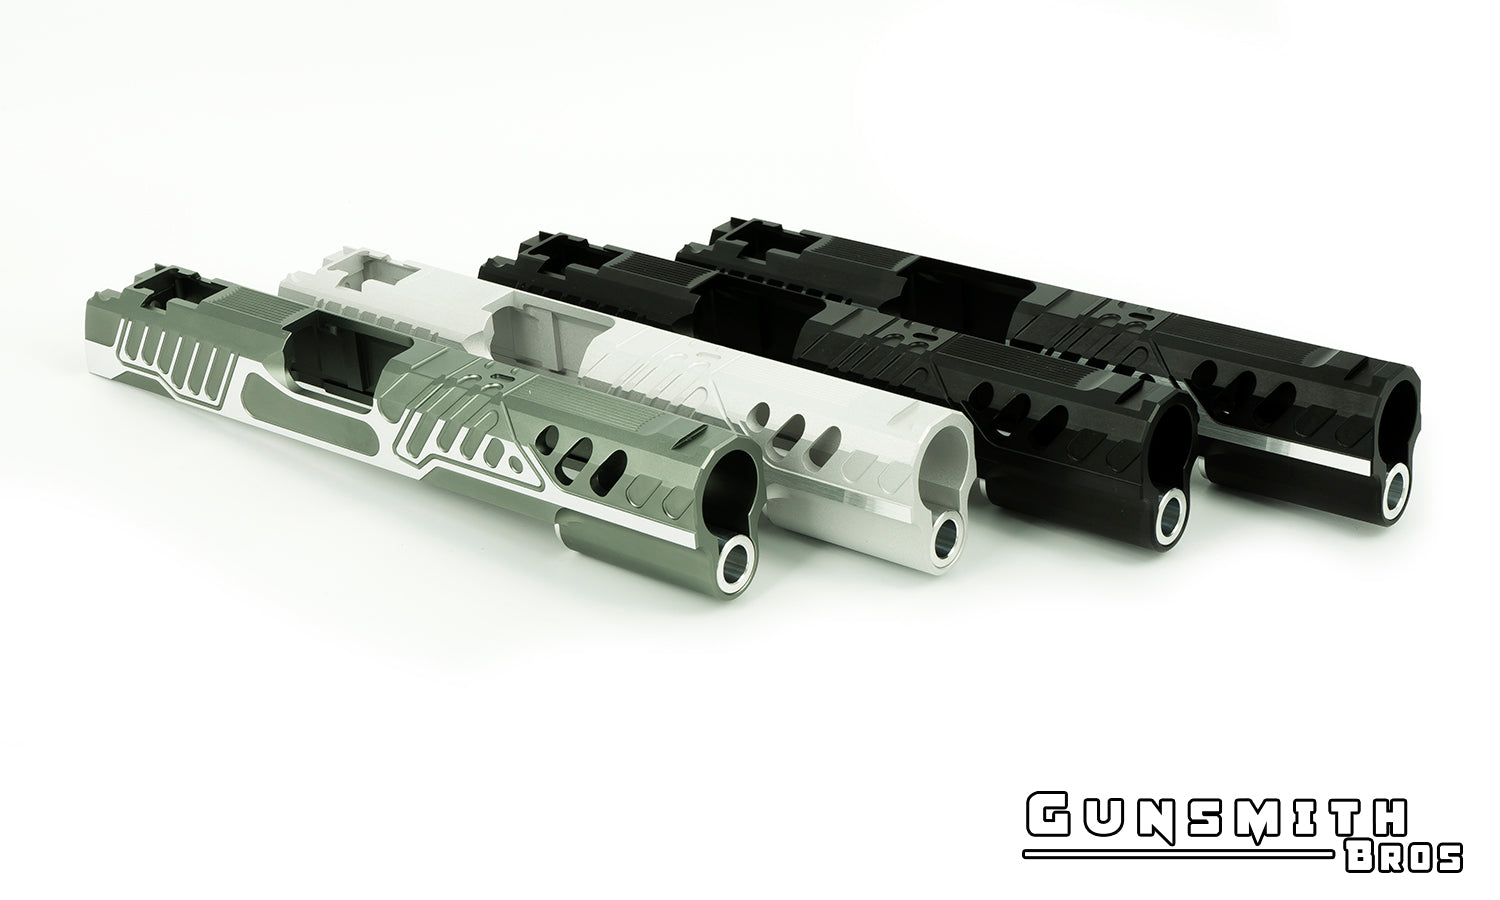 Gunsmith Bros Type 192 Slide for Hi-CAPA #GB-SL-192 - Silver